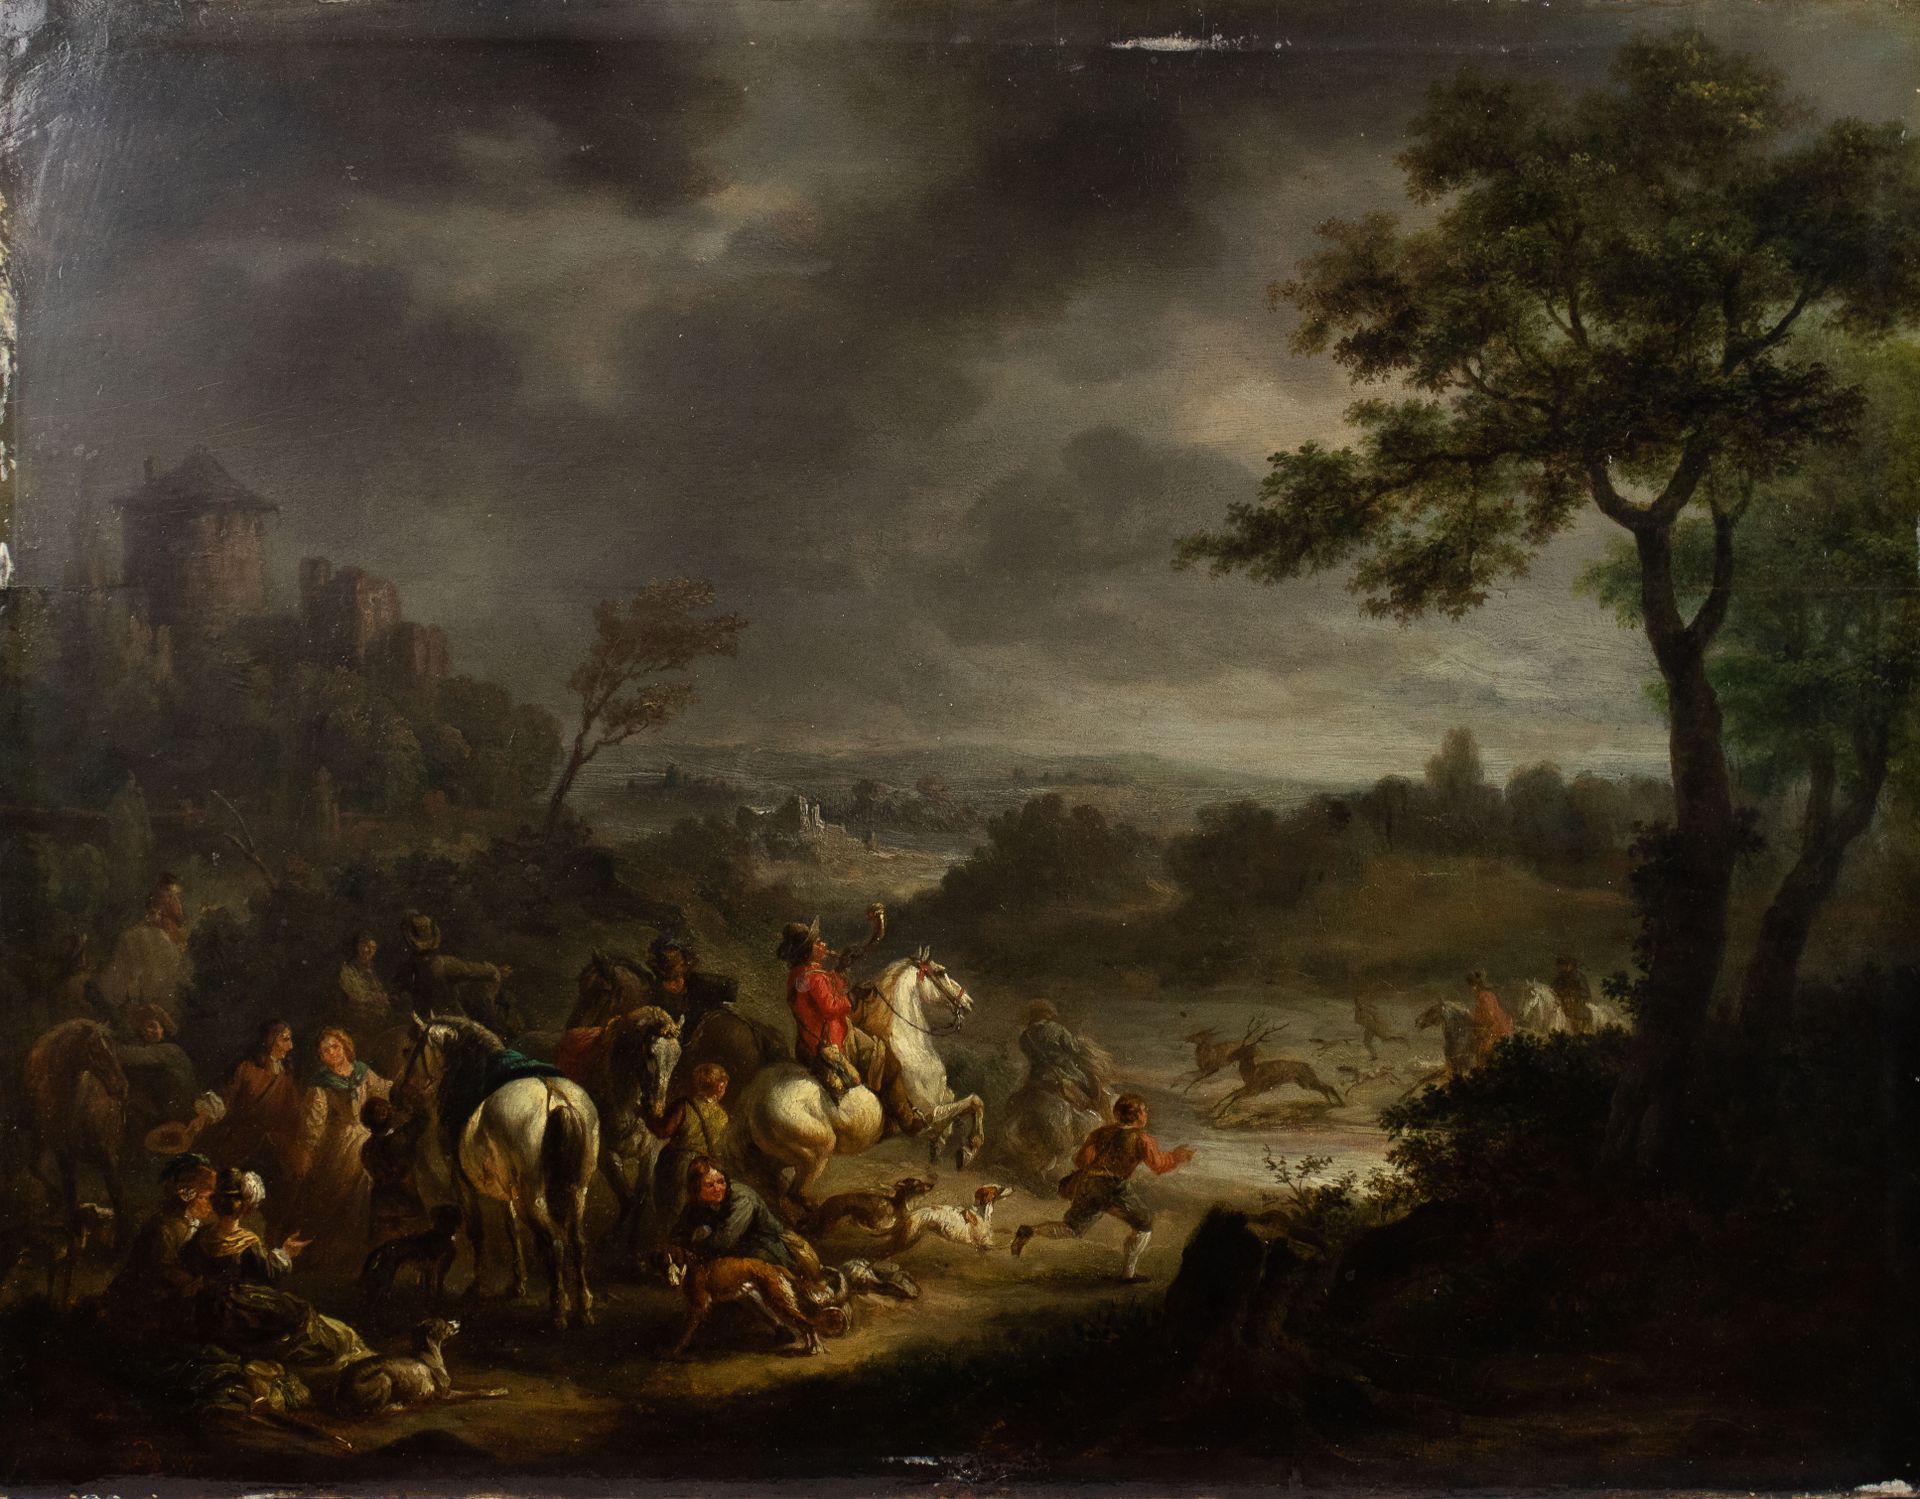 Philips Wouwerman (1619-1668) (environment) 骑兵队。镶板油画，有字样。骑兵队。
44 x 58 cm